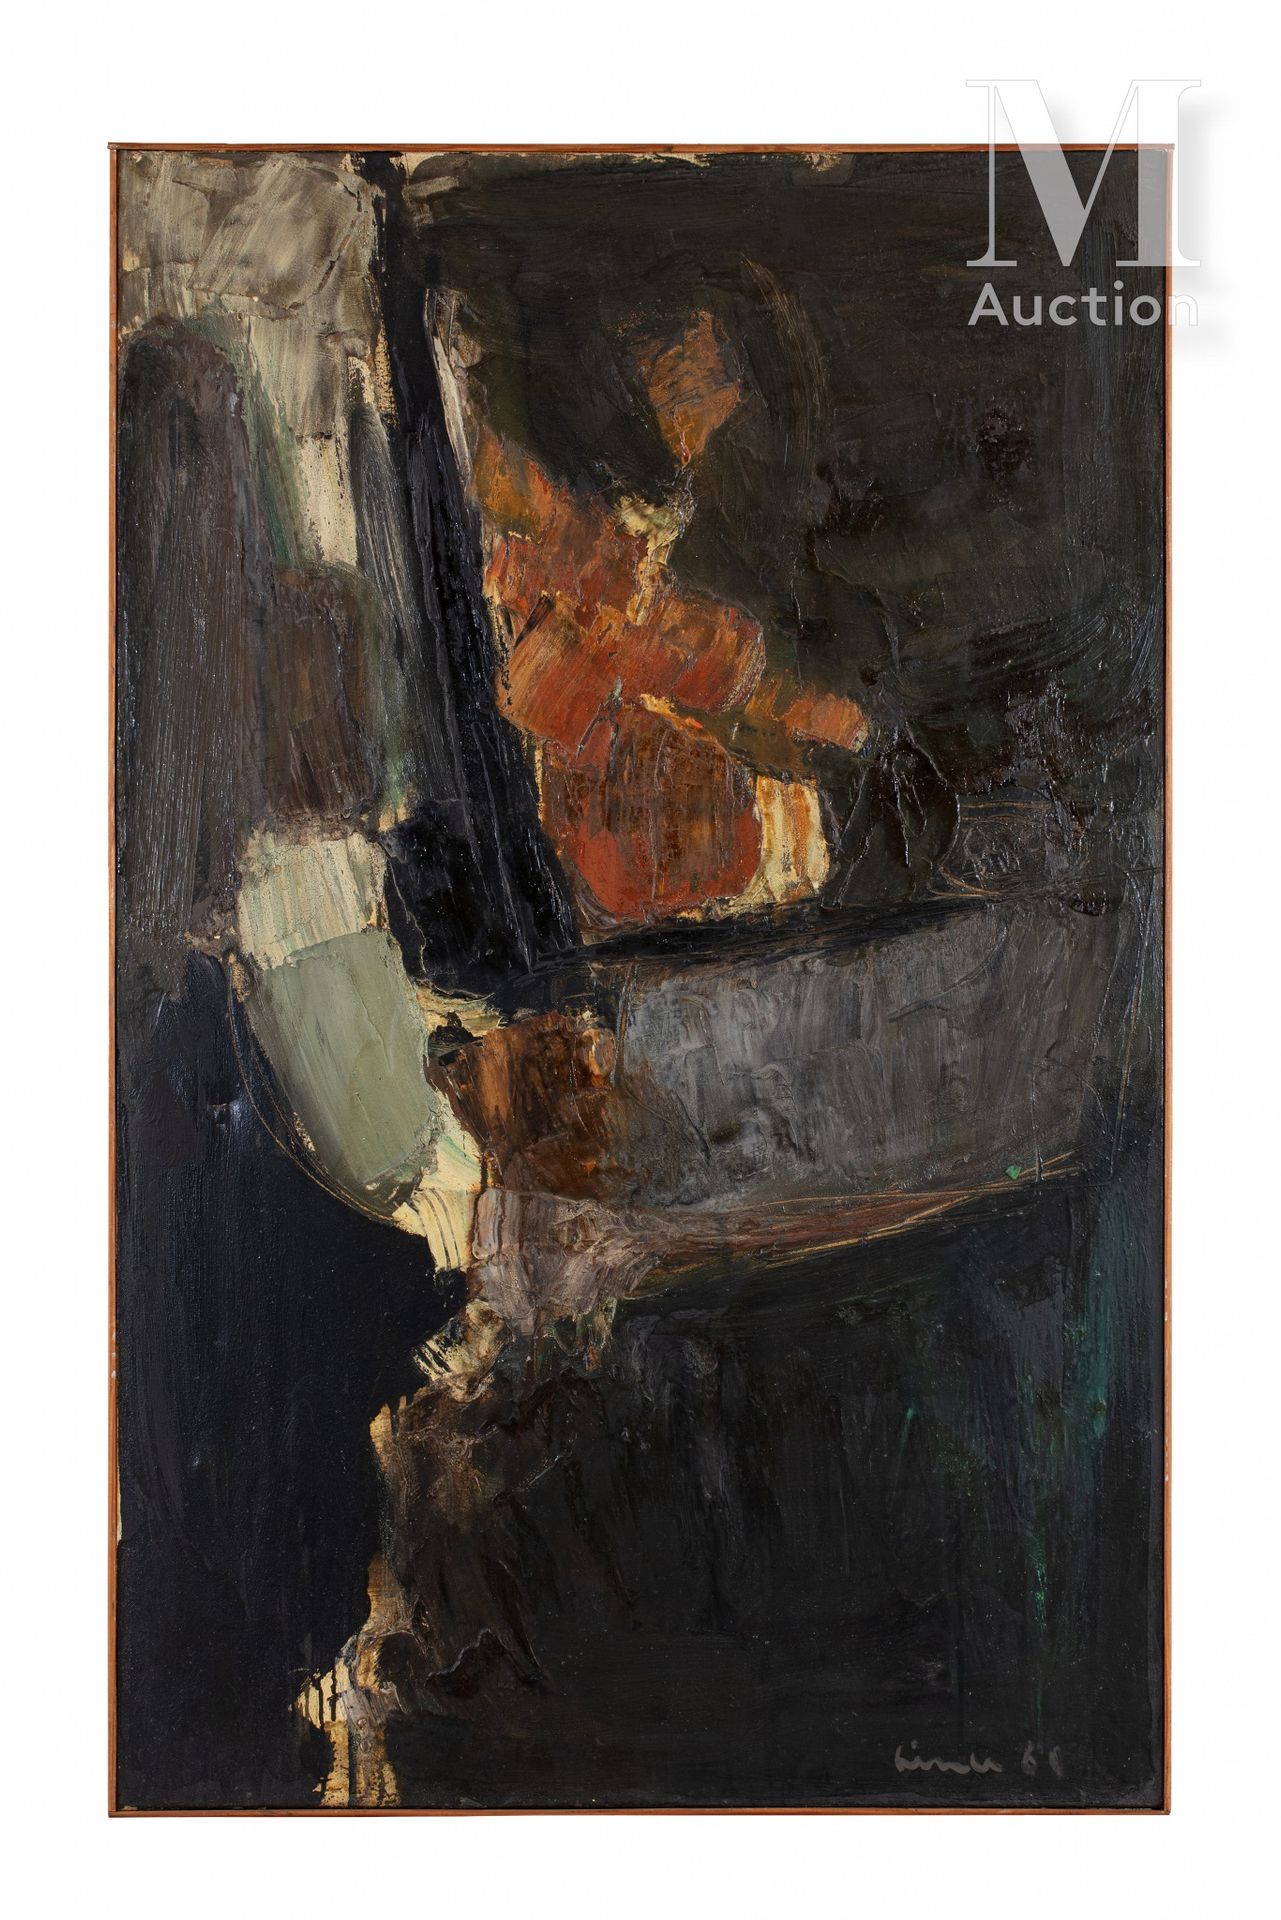 Carl Walter LINER (1914-1997) 构成, 1960年

布面油画，右下角有签名和日期

116 x 73 cm



出处 :

私人&hellip;